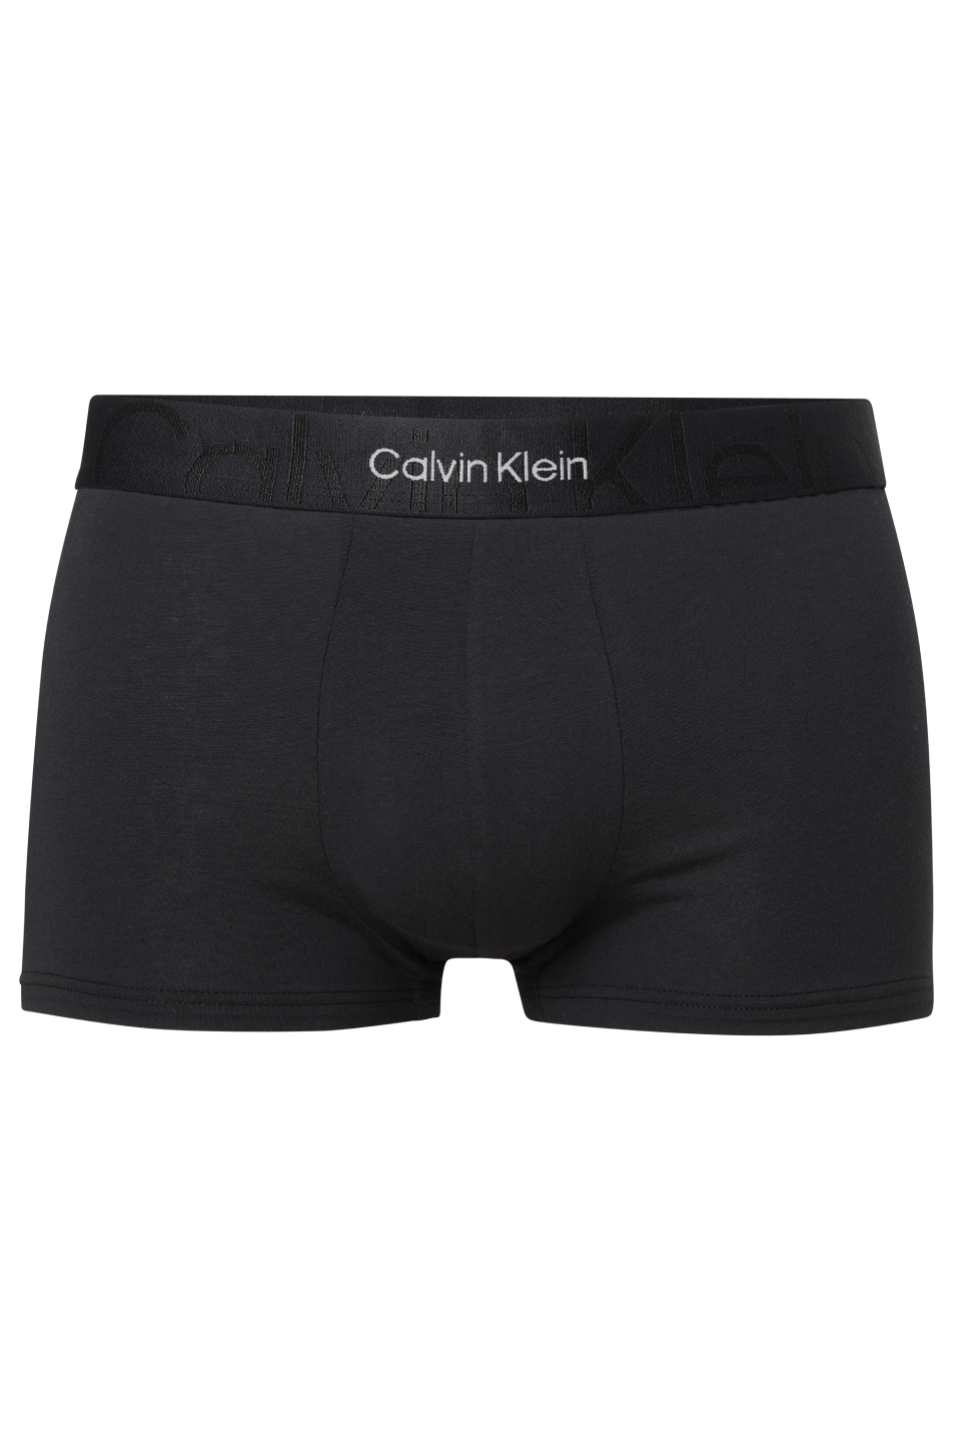 Calvin Klein Men's Recycled Cotton Stretch Trunk